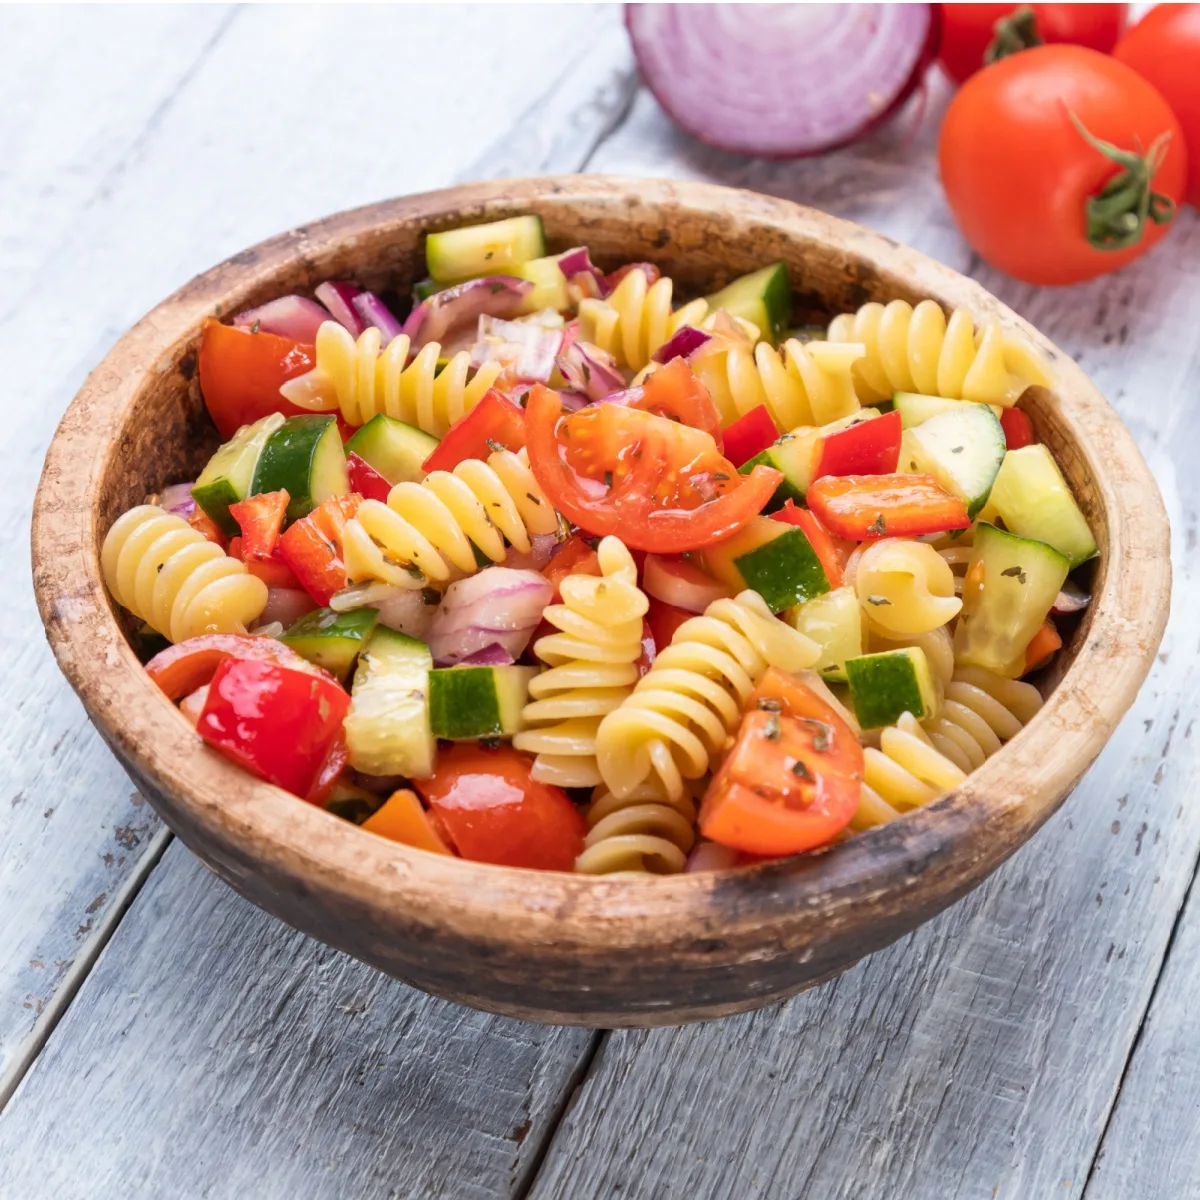 zesty pasta salad